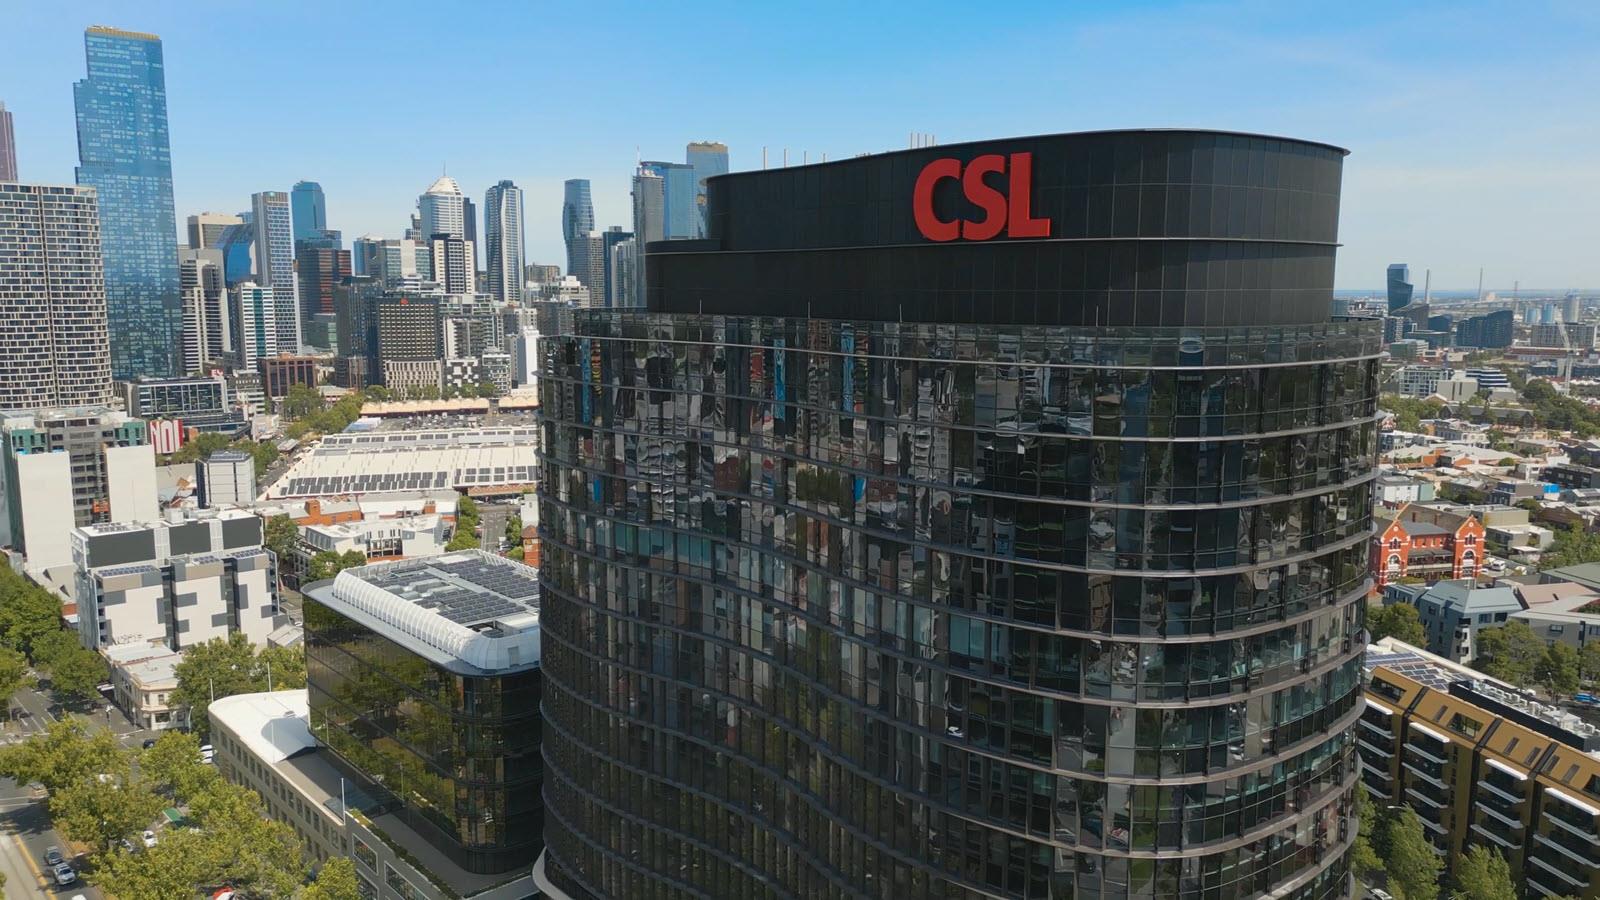 aerial view of CSL's new headquarters building in Melbourne, Australia